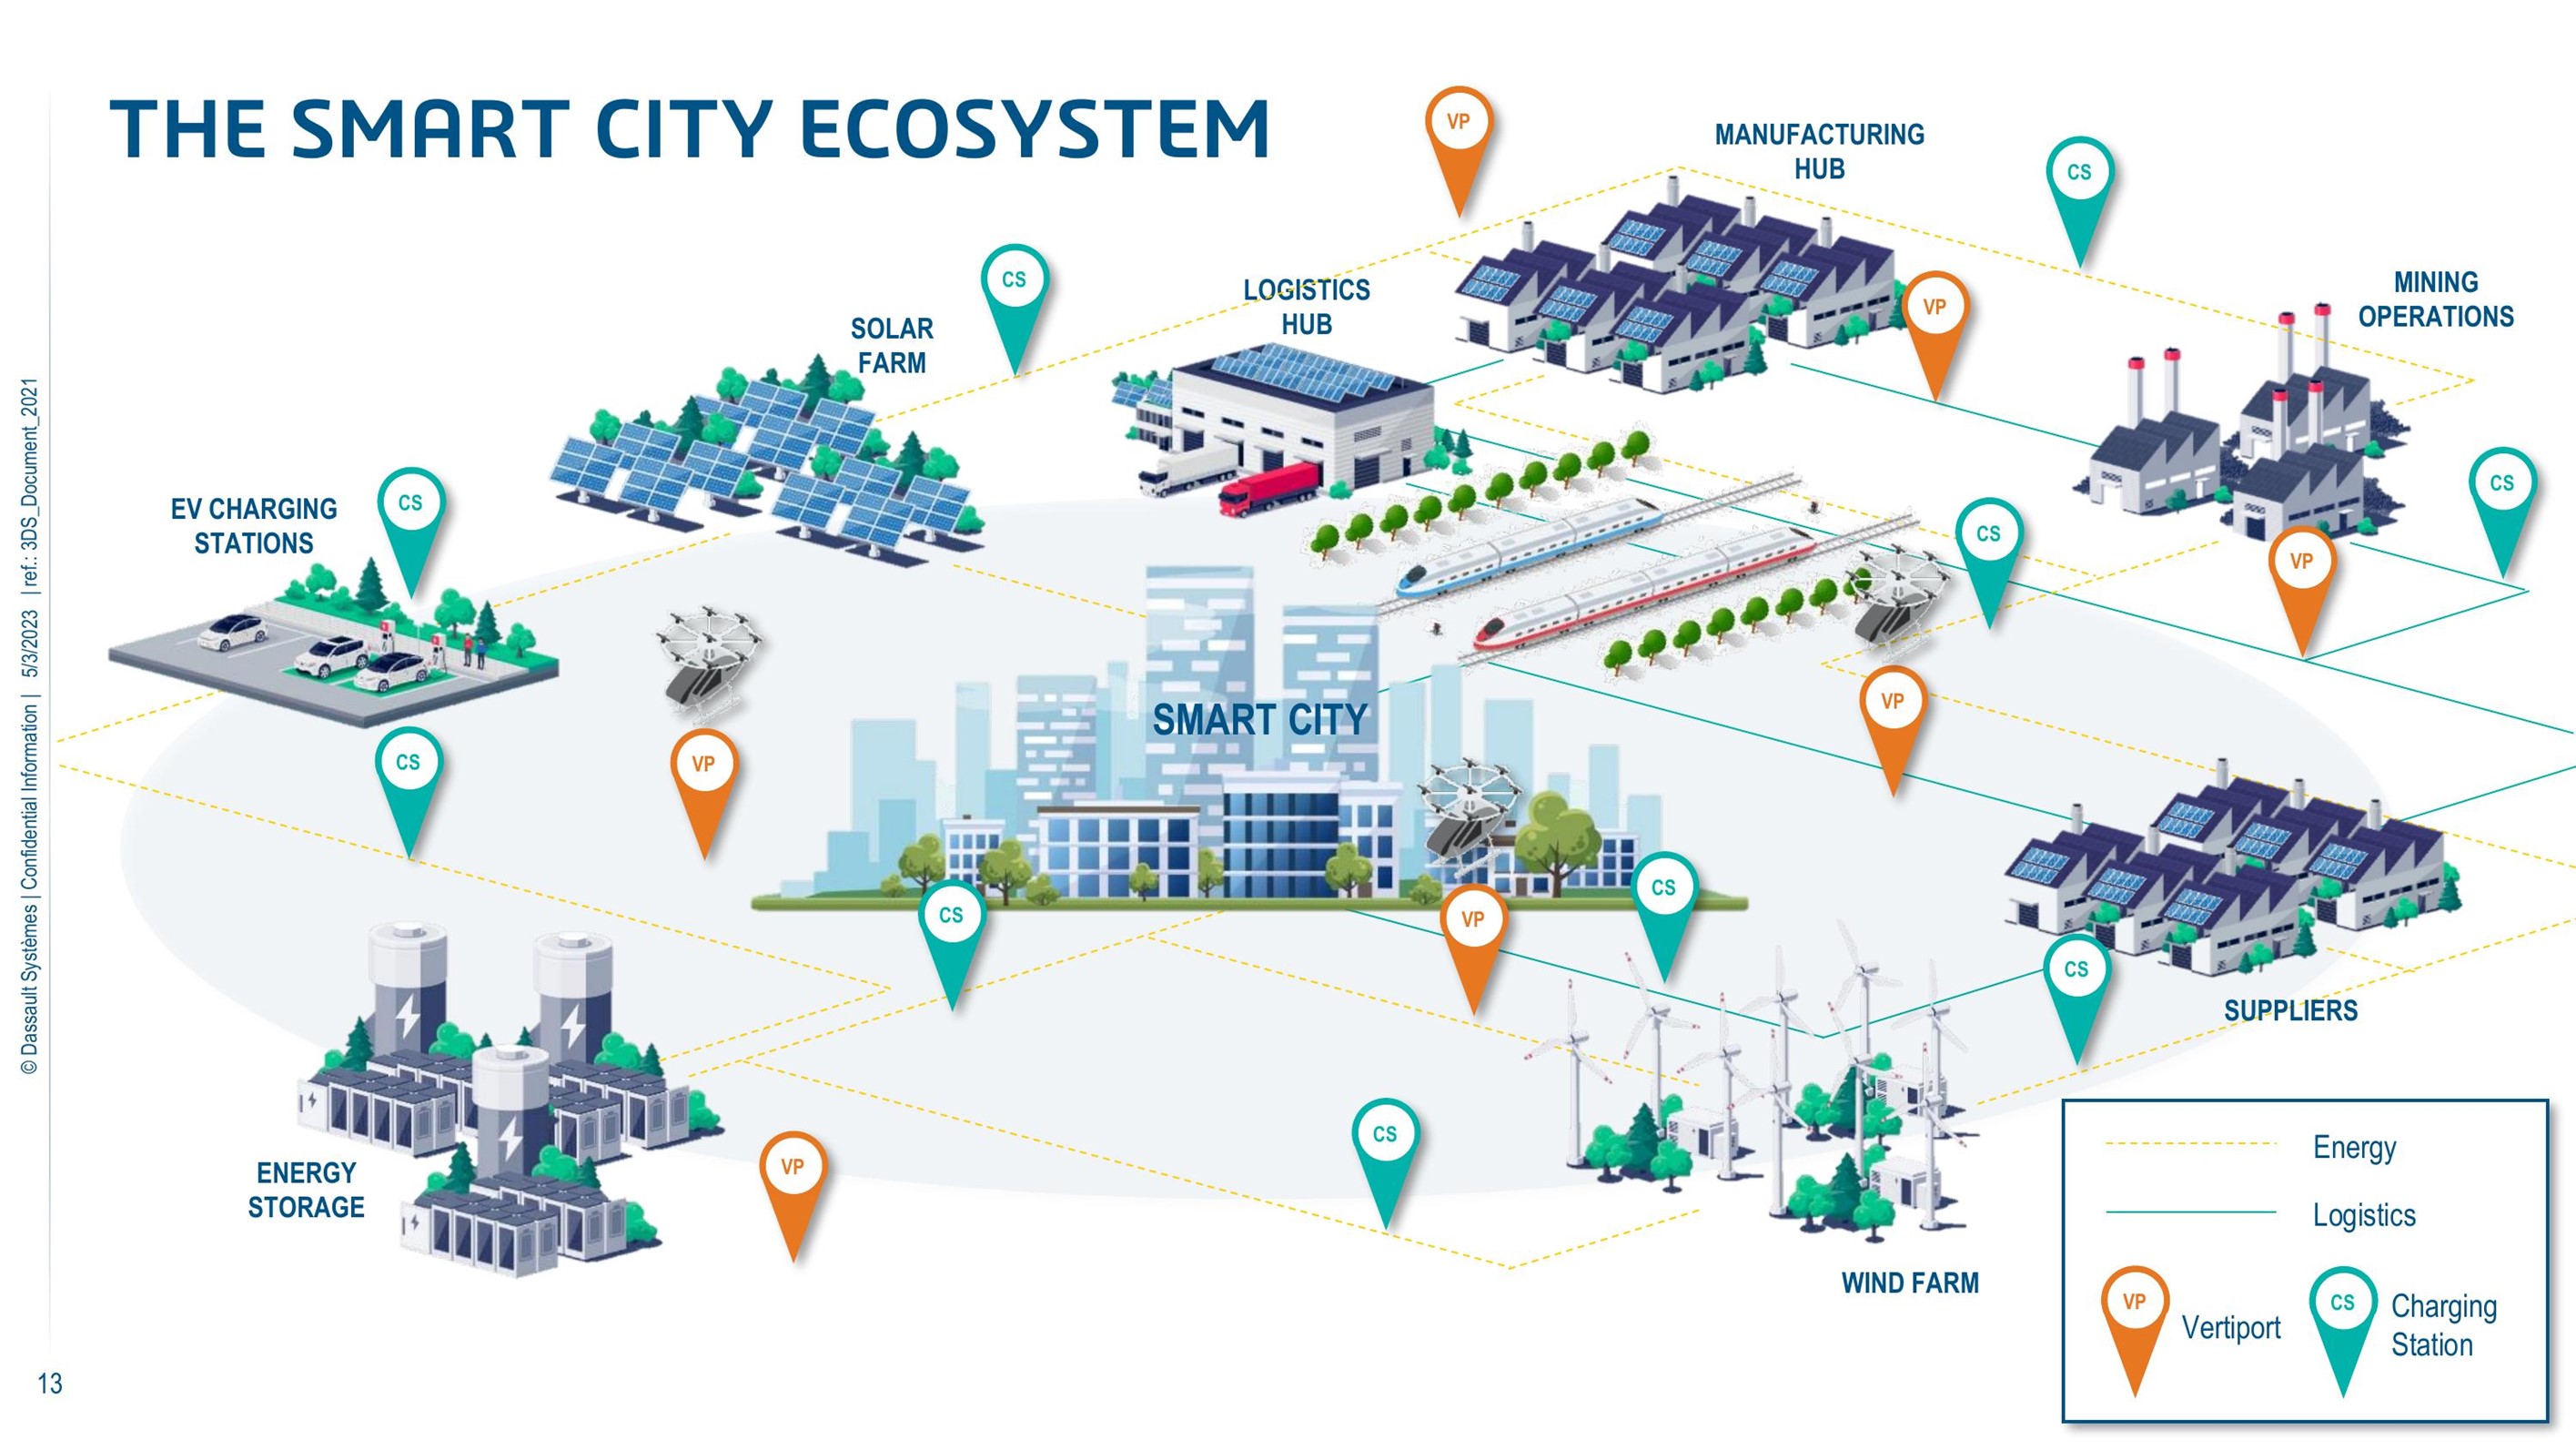 Dassault Systèmes เผยโฉม Virtual Twin พัฒนาการเดินทางในอนาคต (Future Mobility) และเมืองอัจฉริยะ (Smart Cities) ของไทยสู่ความยั่งยืน